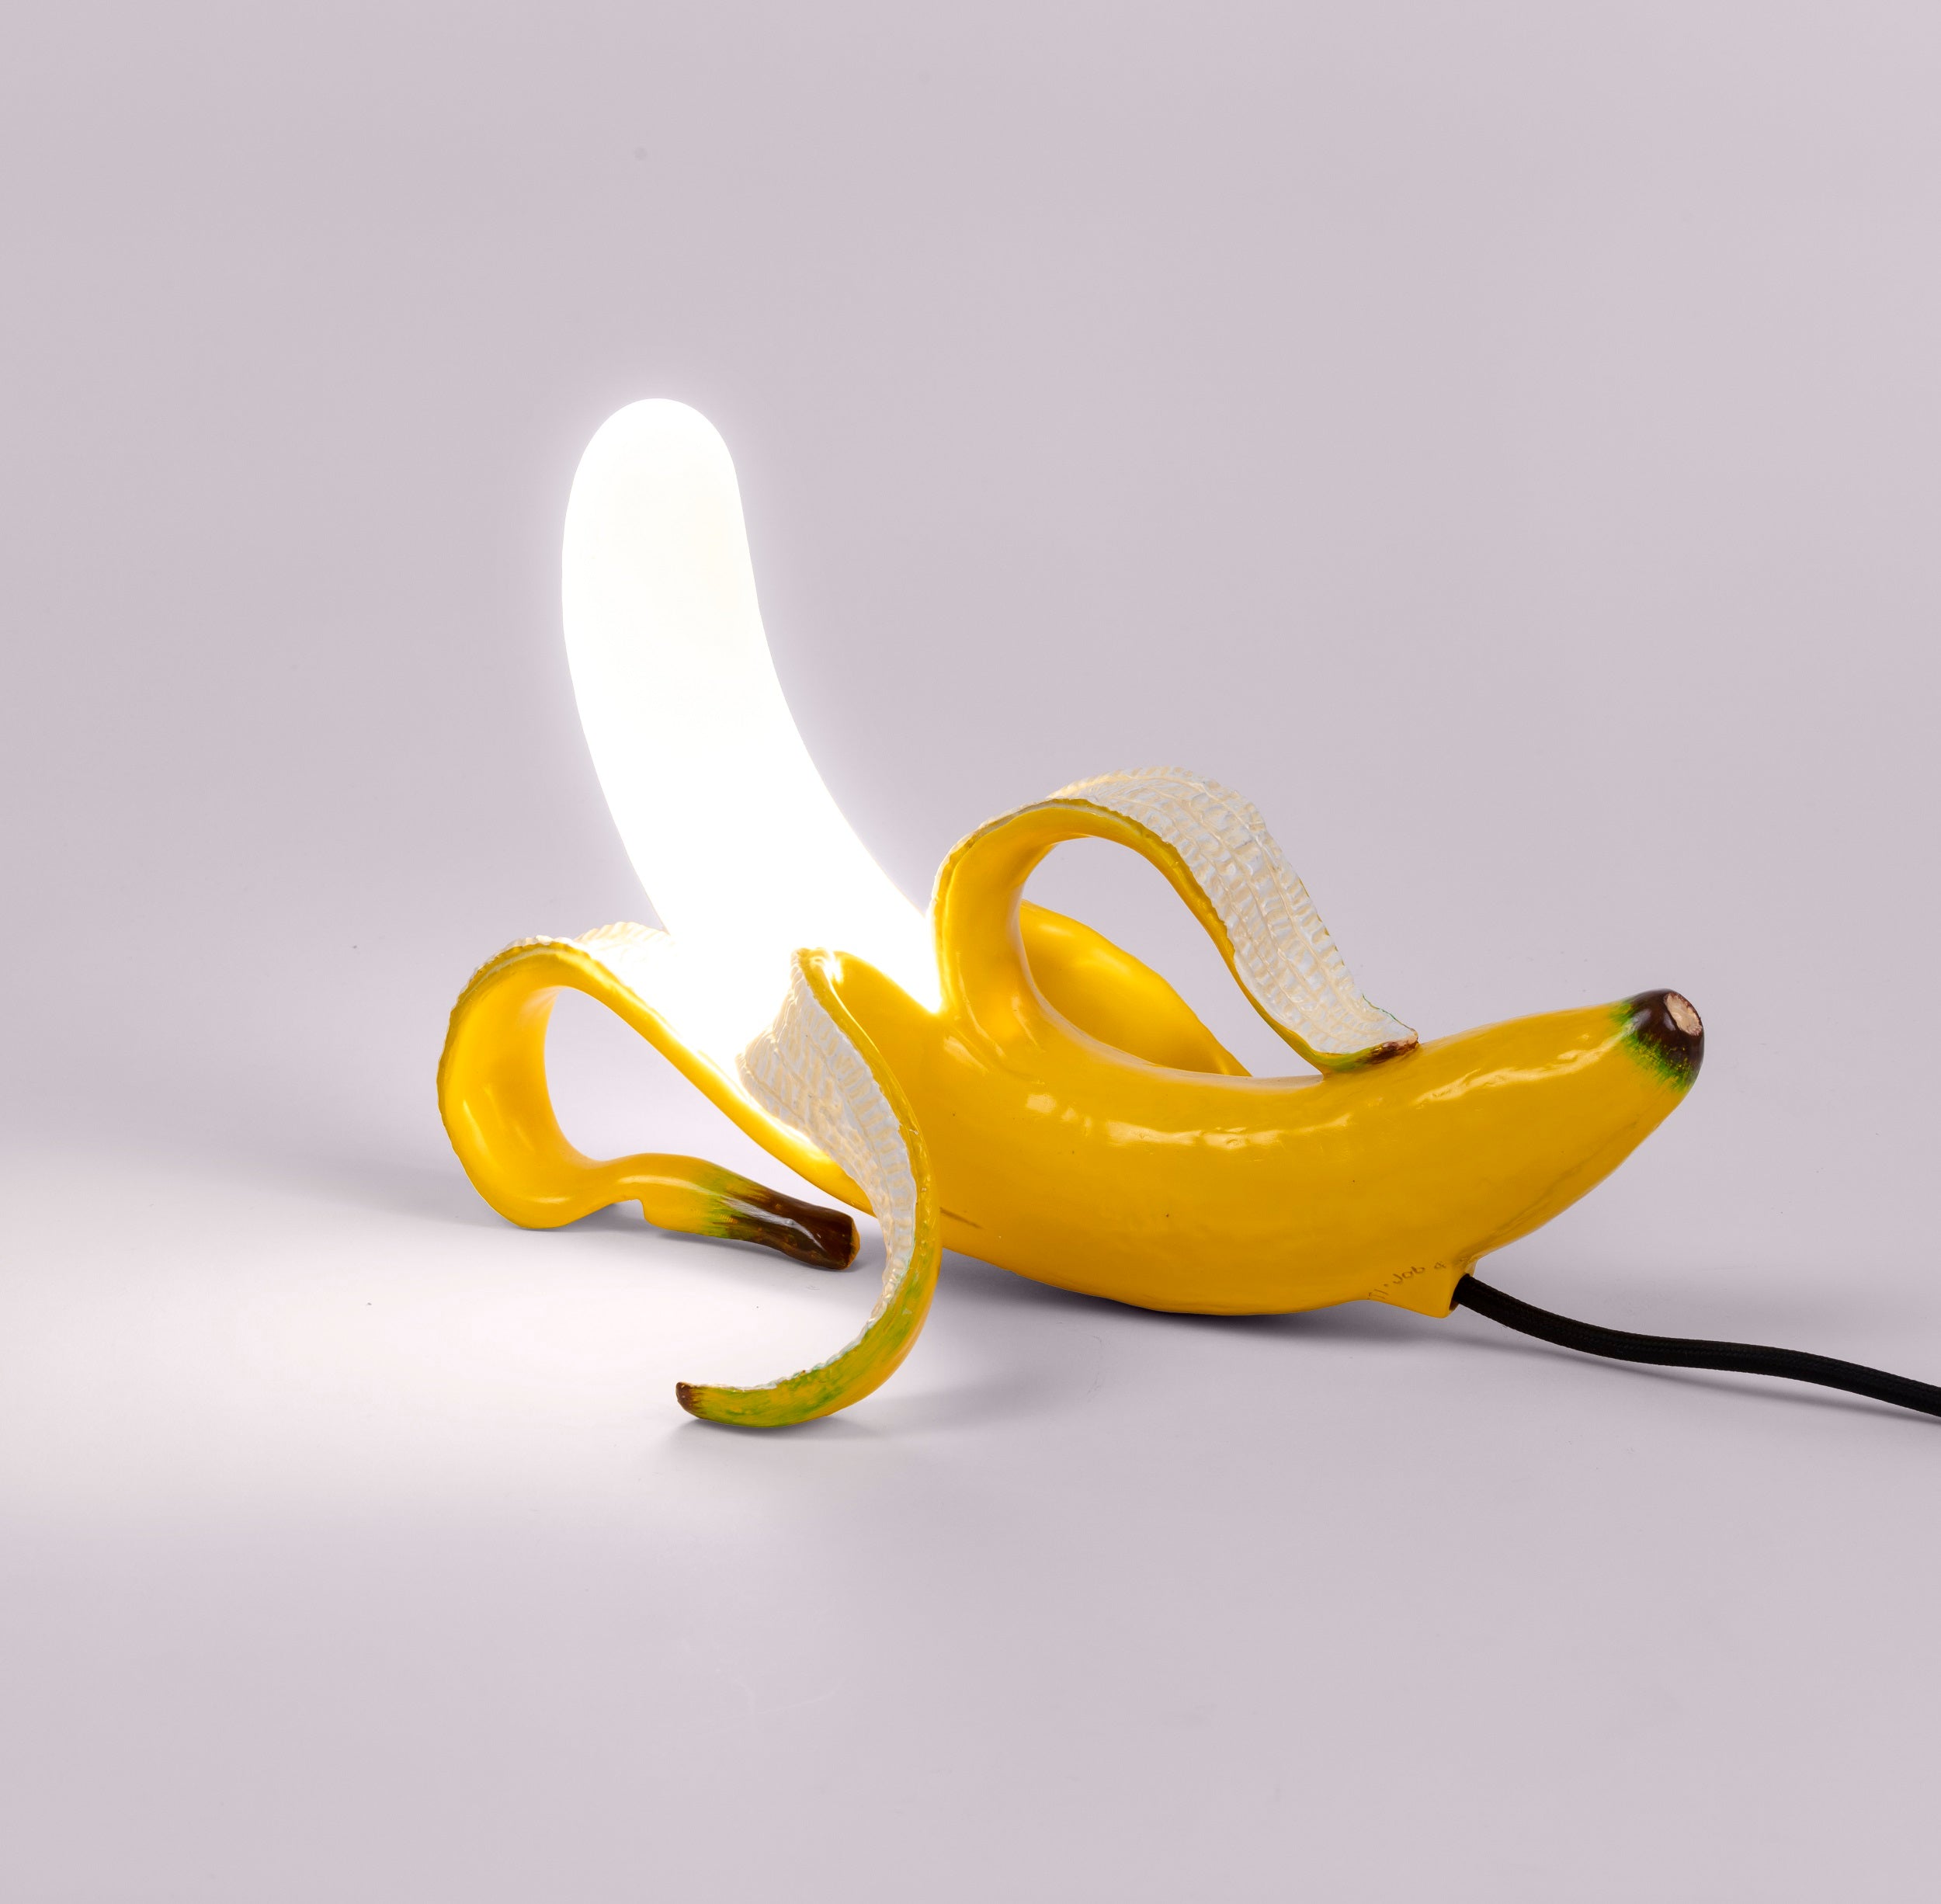 Seletti Banana Lamp Huey Resin and glass lamp